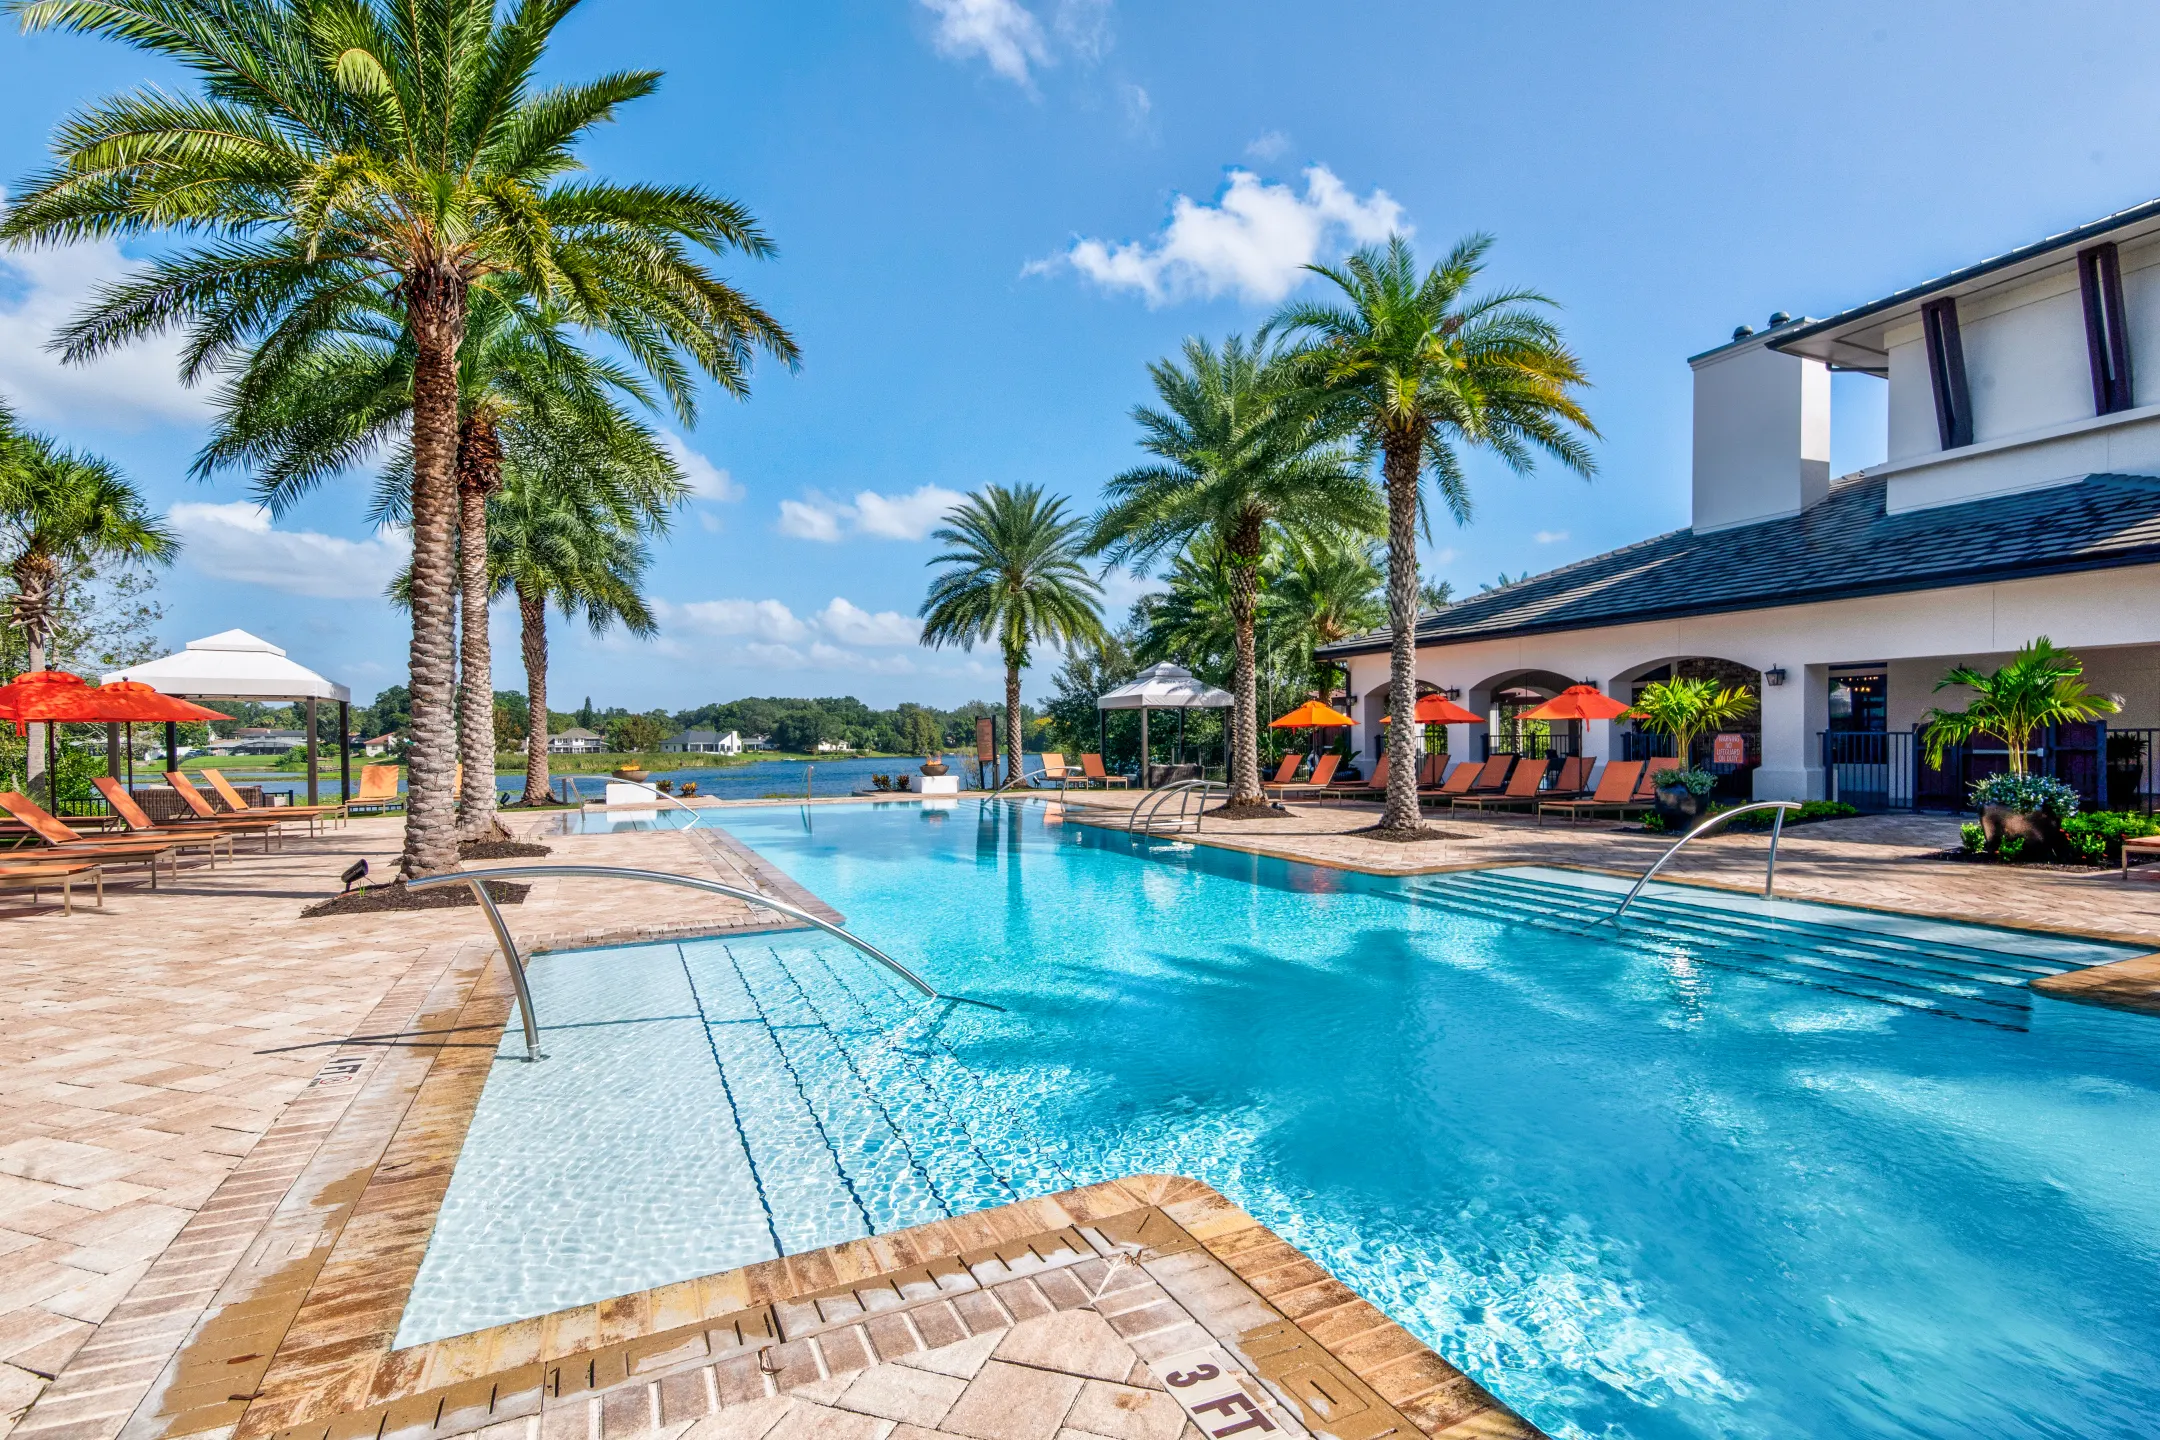 Pool - Trelago Apartments - Maitland, FL